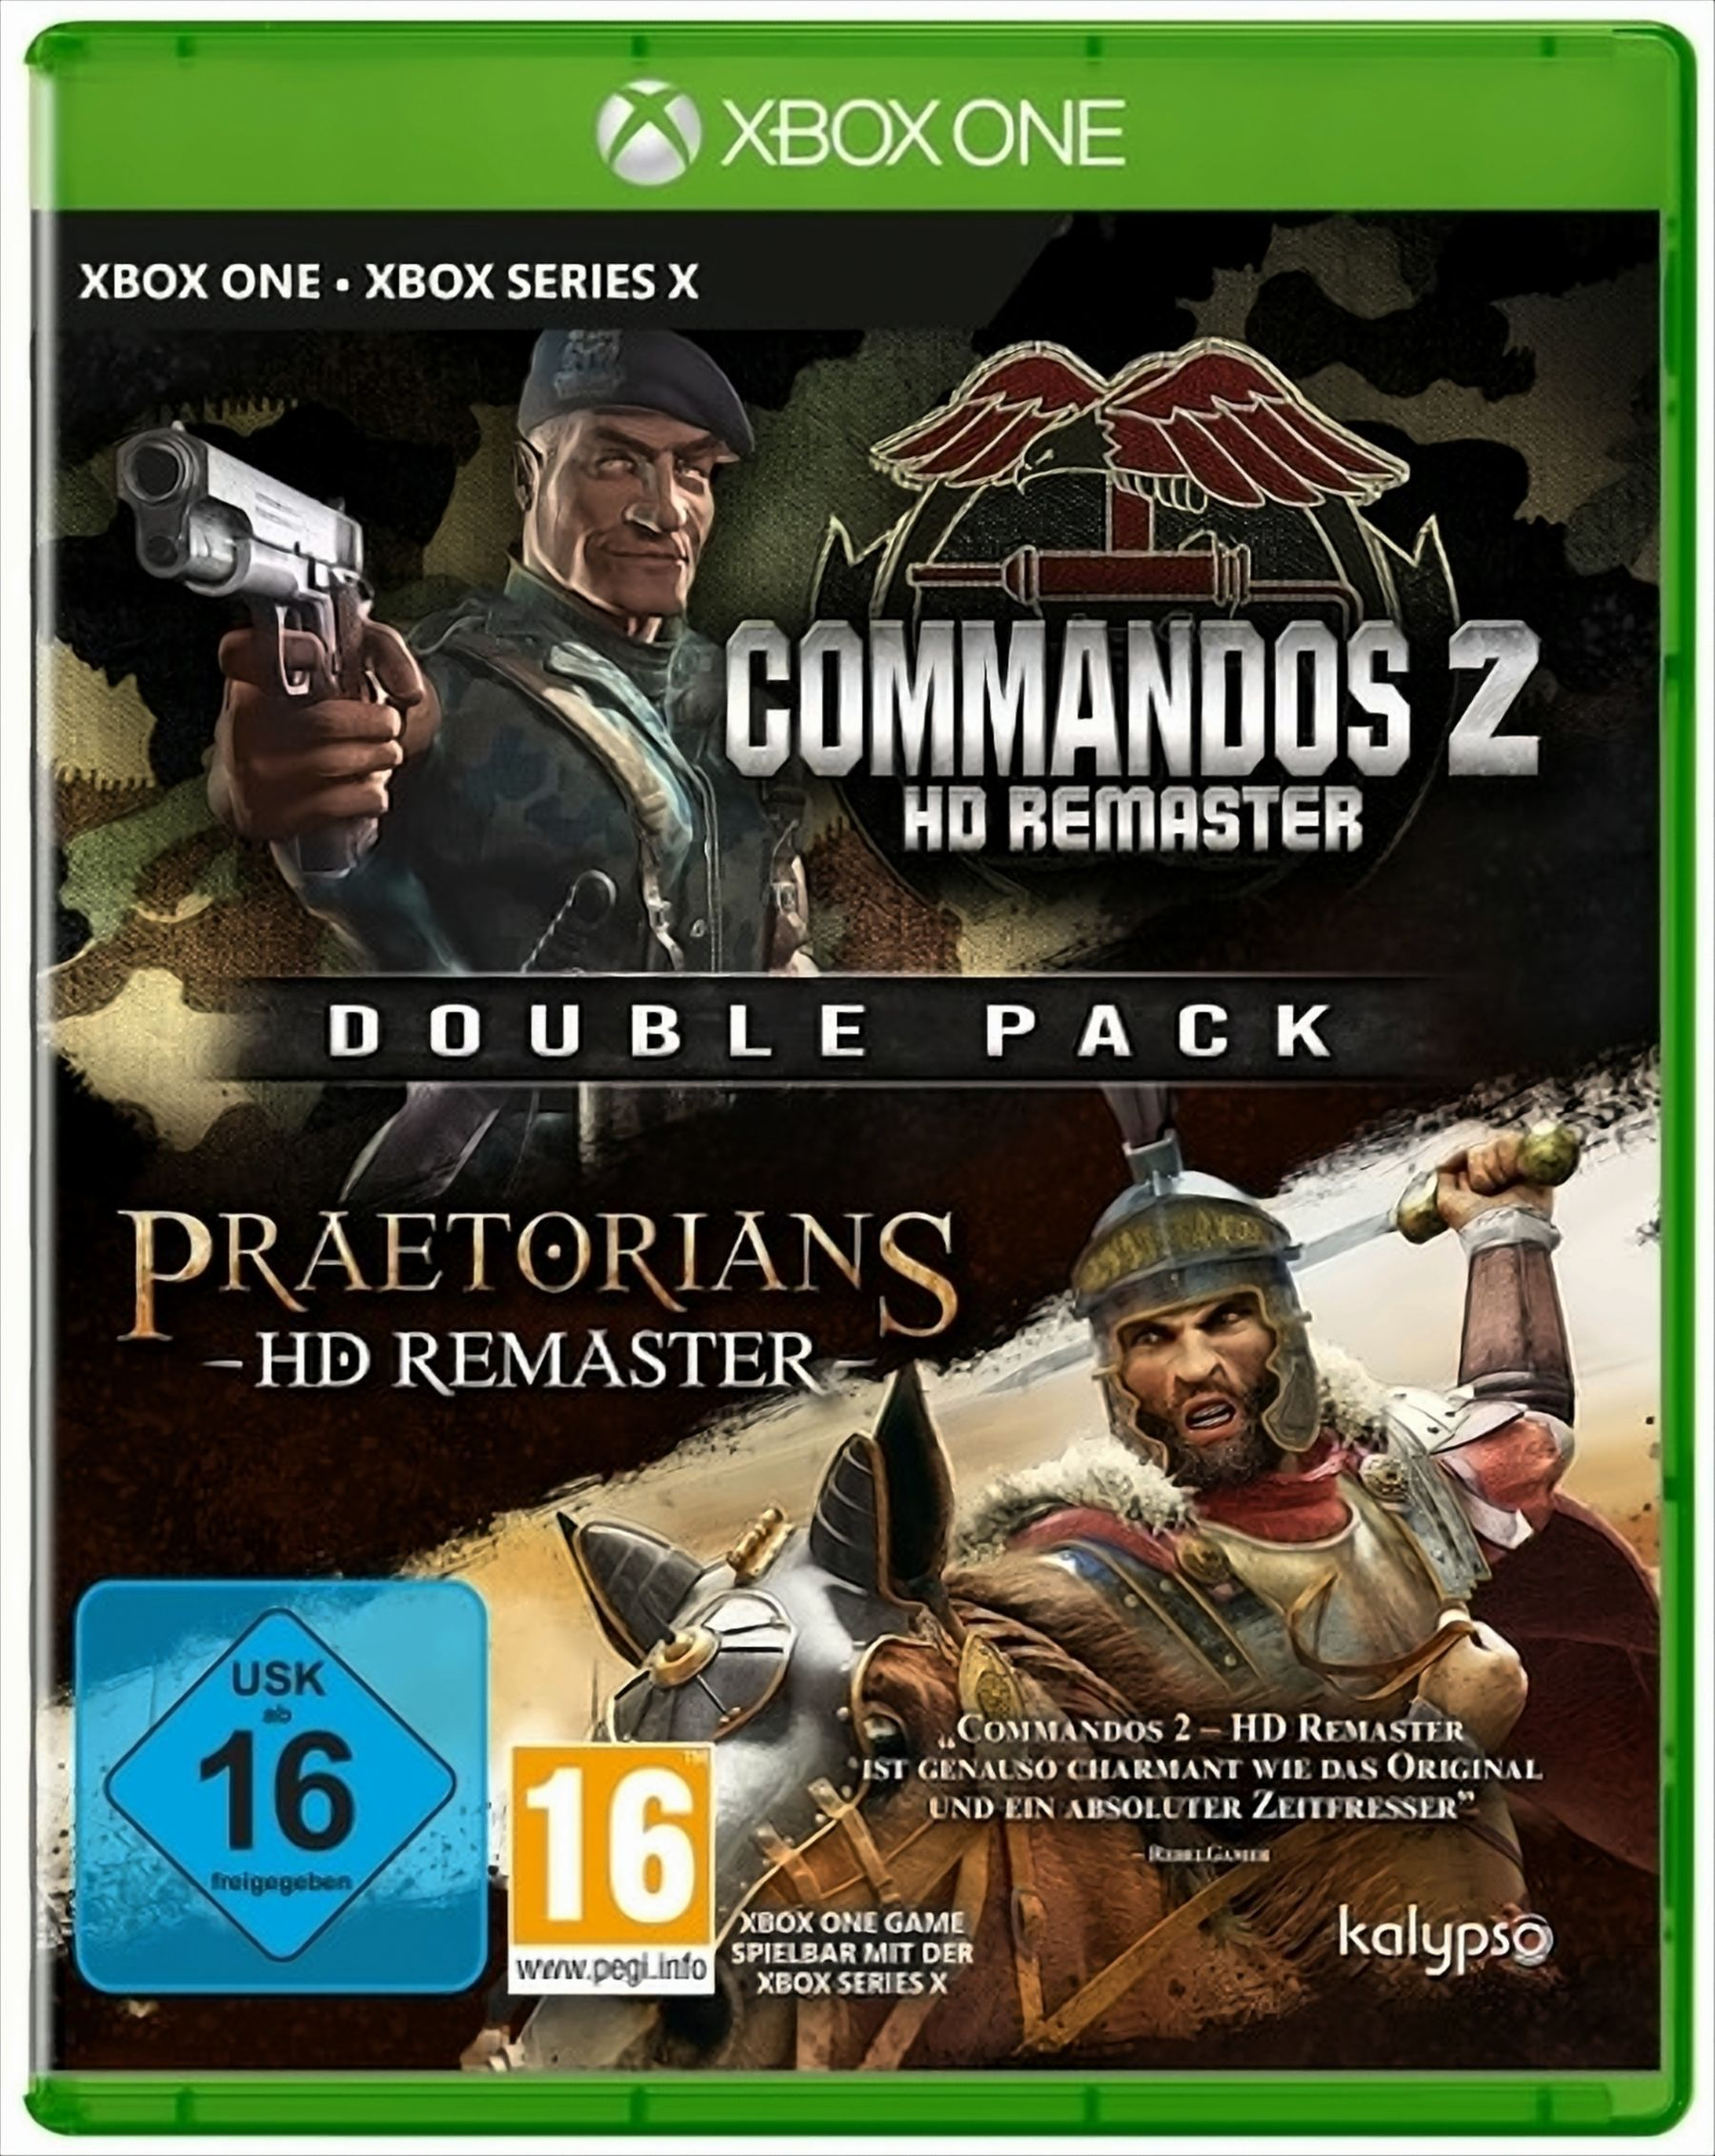 HD (XONE) & One] Commandos Pack Double [Xbox - Praetorians: Remaster 2